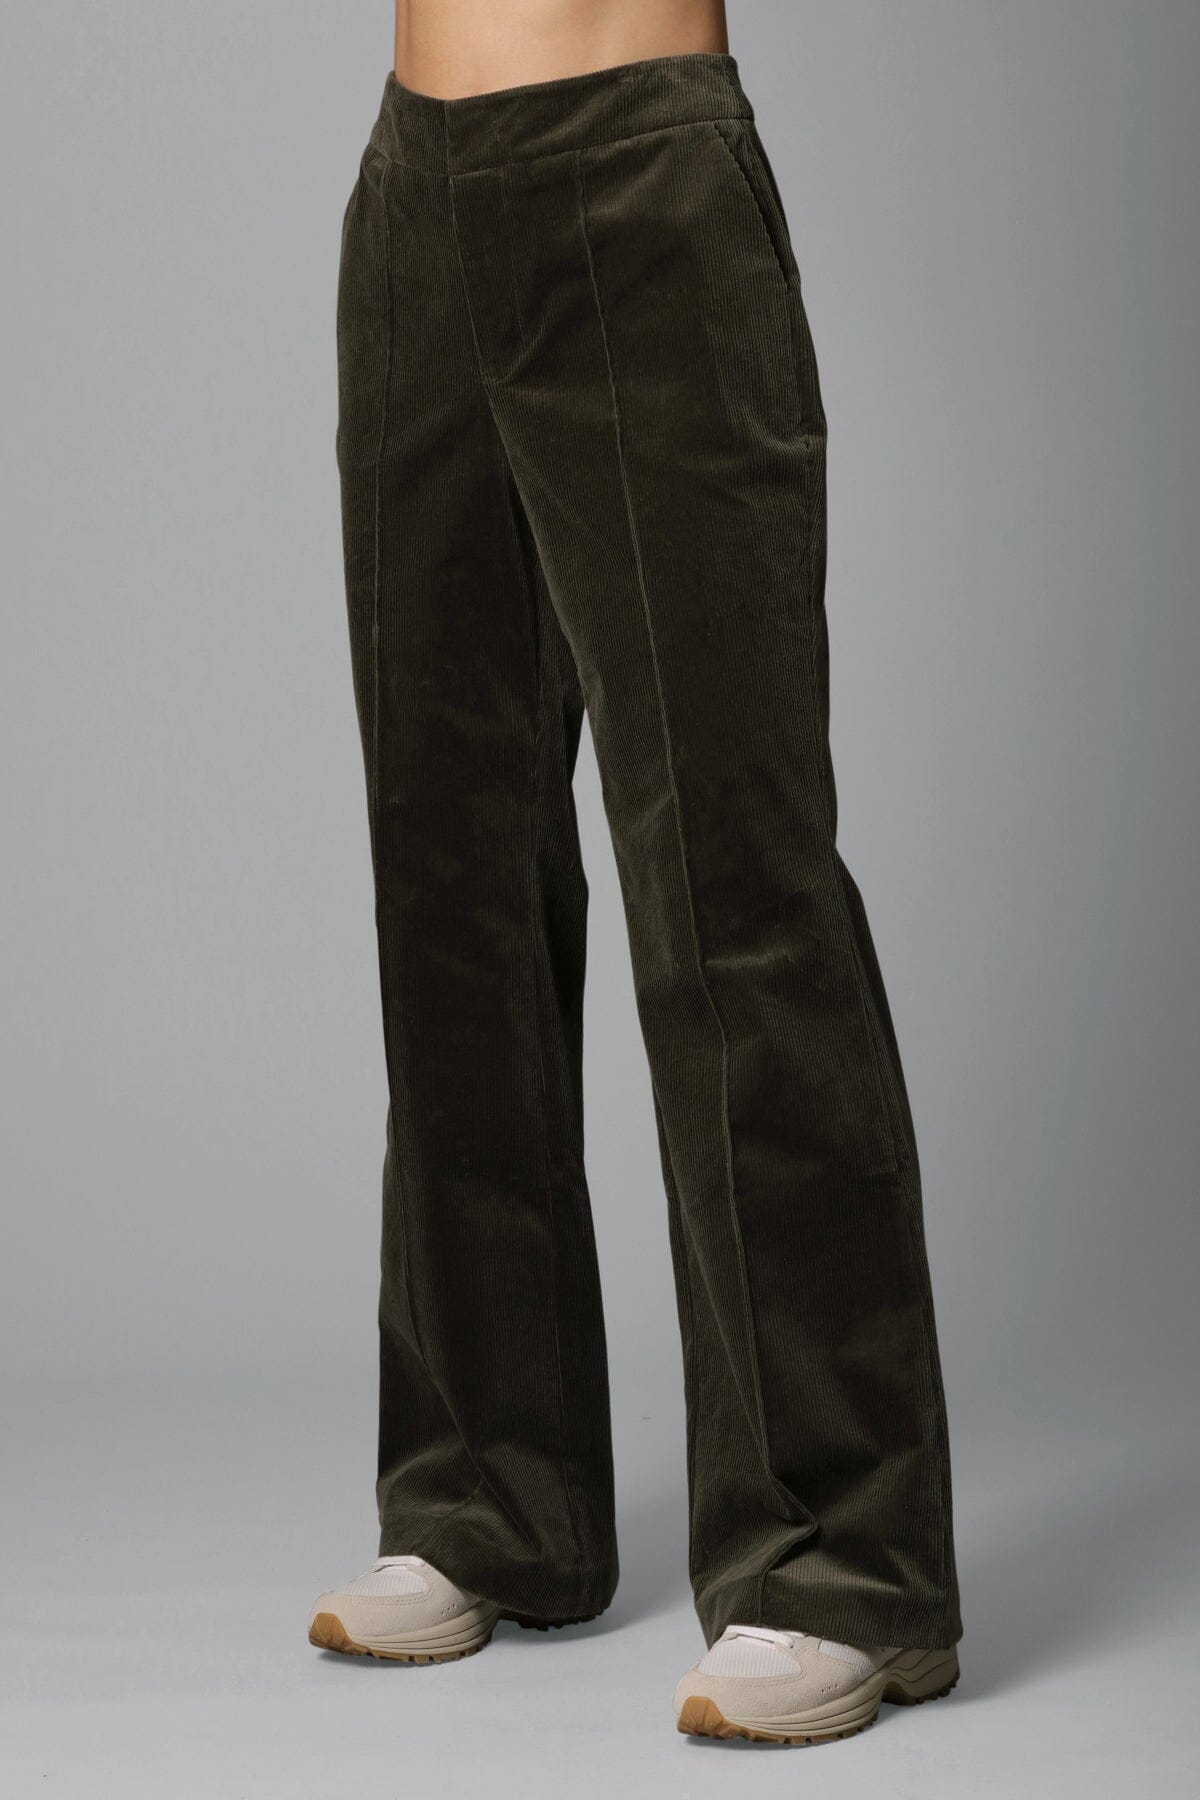 Dark moss green stretch corduroy flare trouser pant - figure flattering date night trousers pants for women